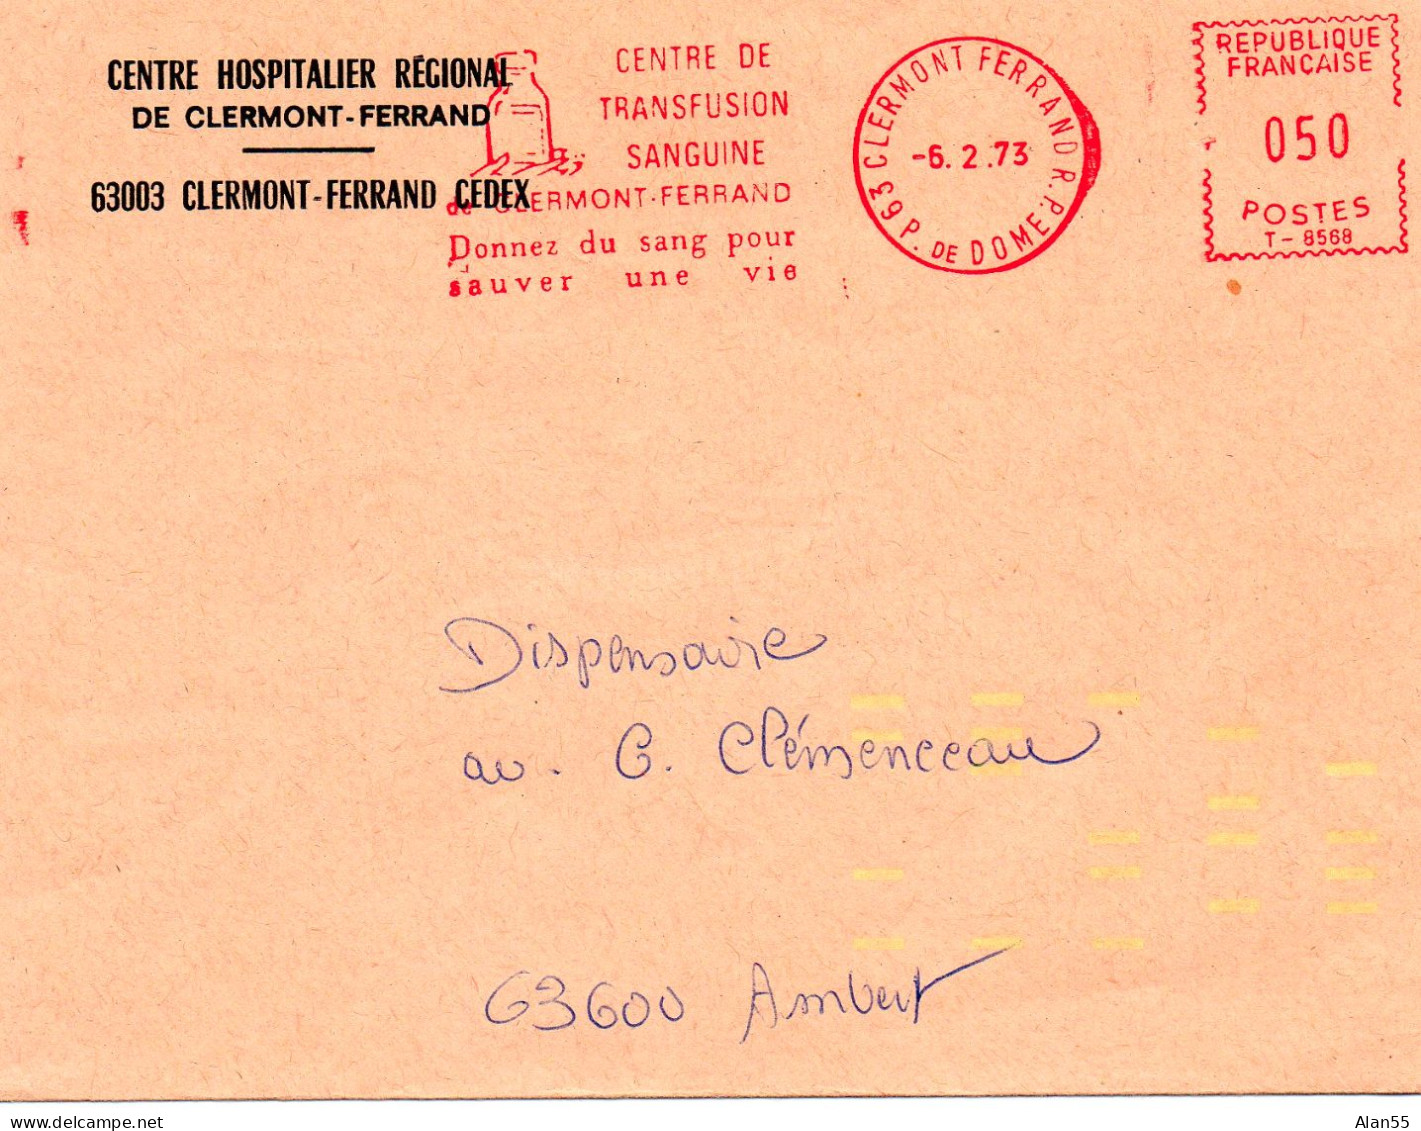 FRANCE.1956. " TRANSFUSION SANGUINE". MARQUE JAUNE INDEXATION COURRIER. - Erste Hilfe